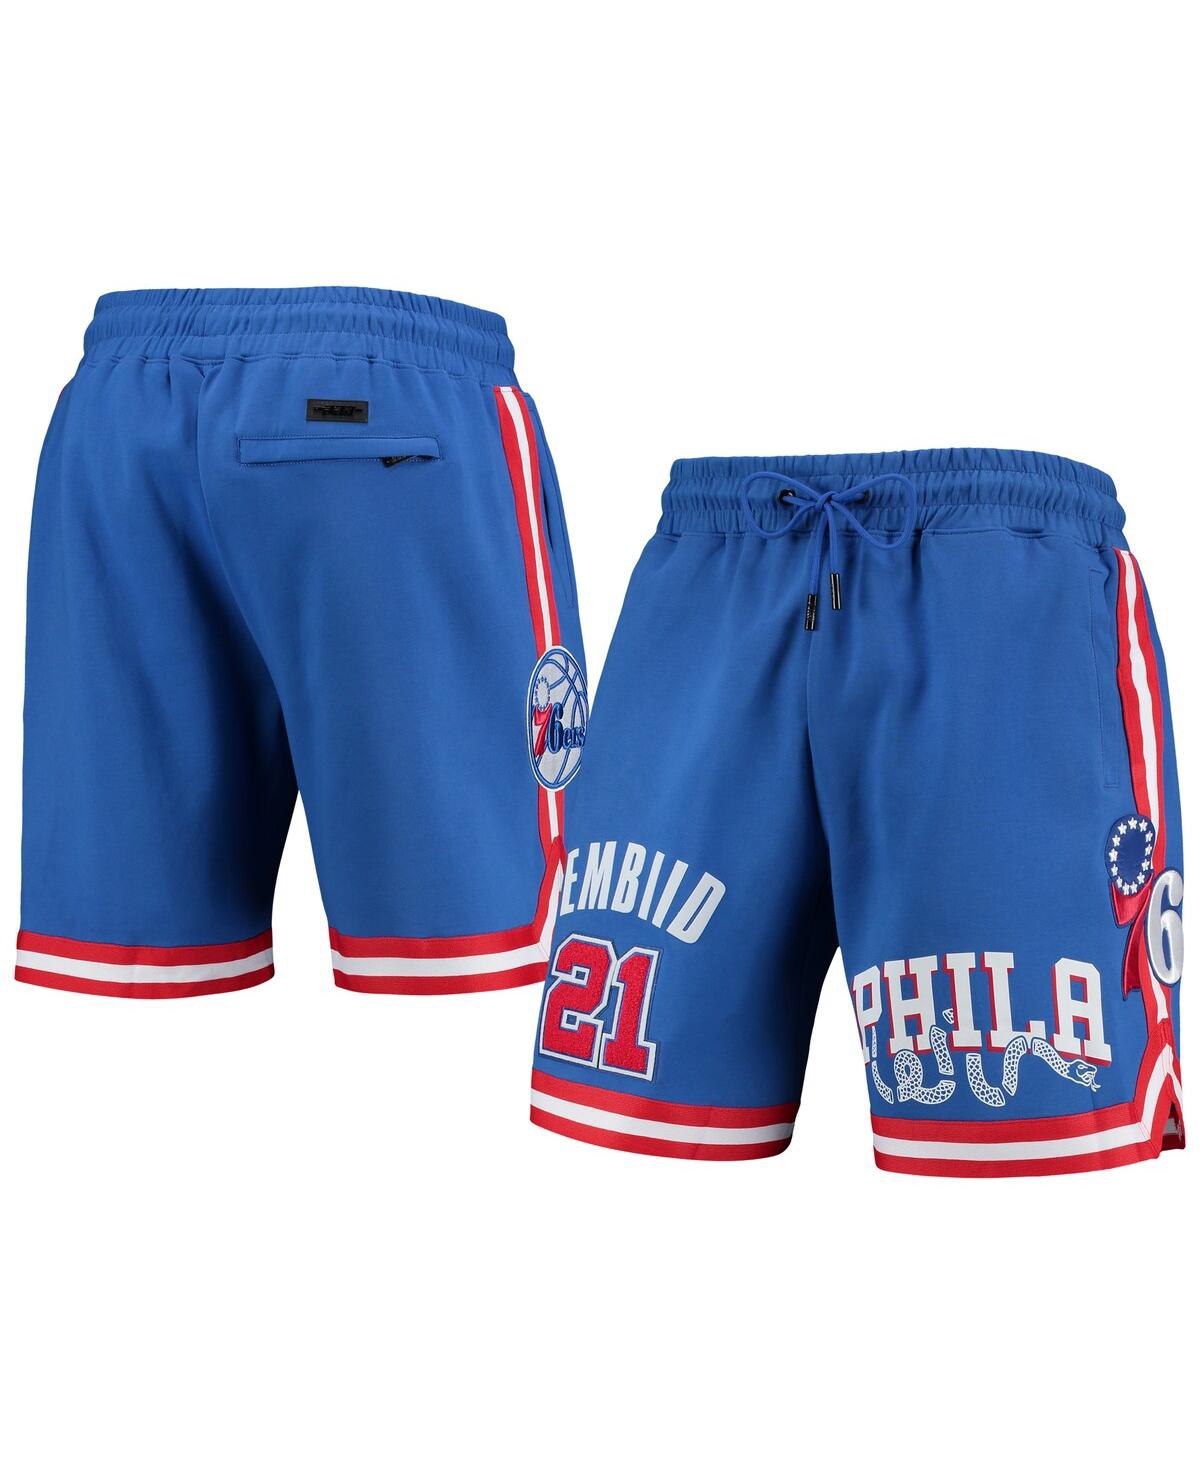 Men's Joel Embiid Royal Philadelphia 76ers Team Player Shorts - Royal